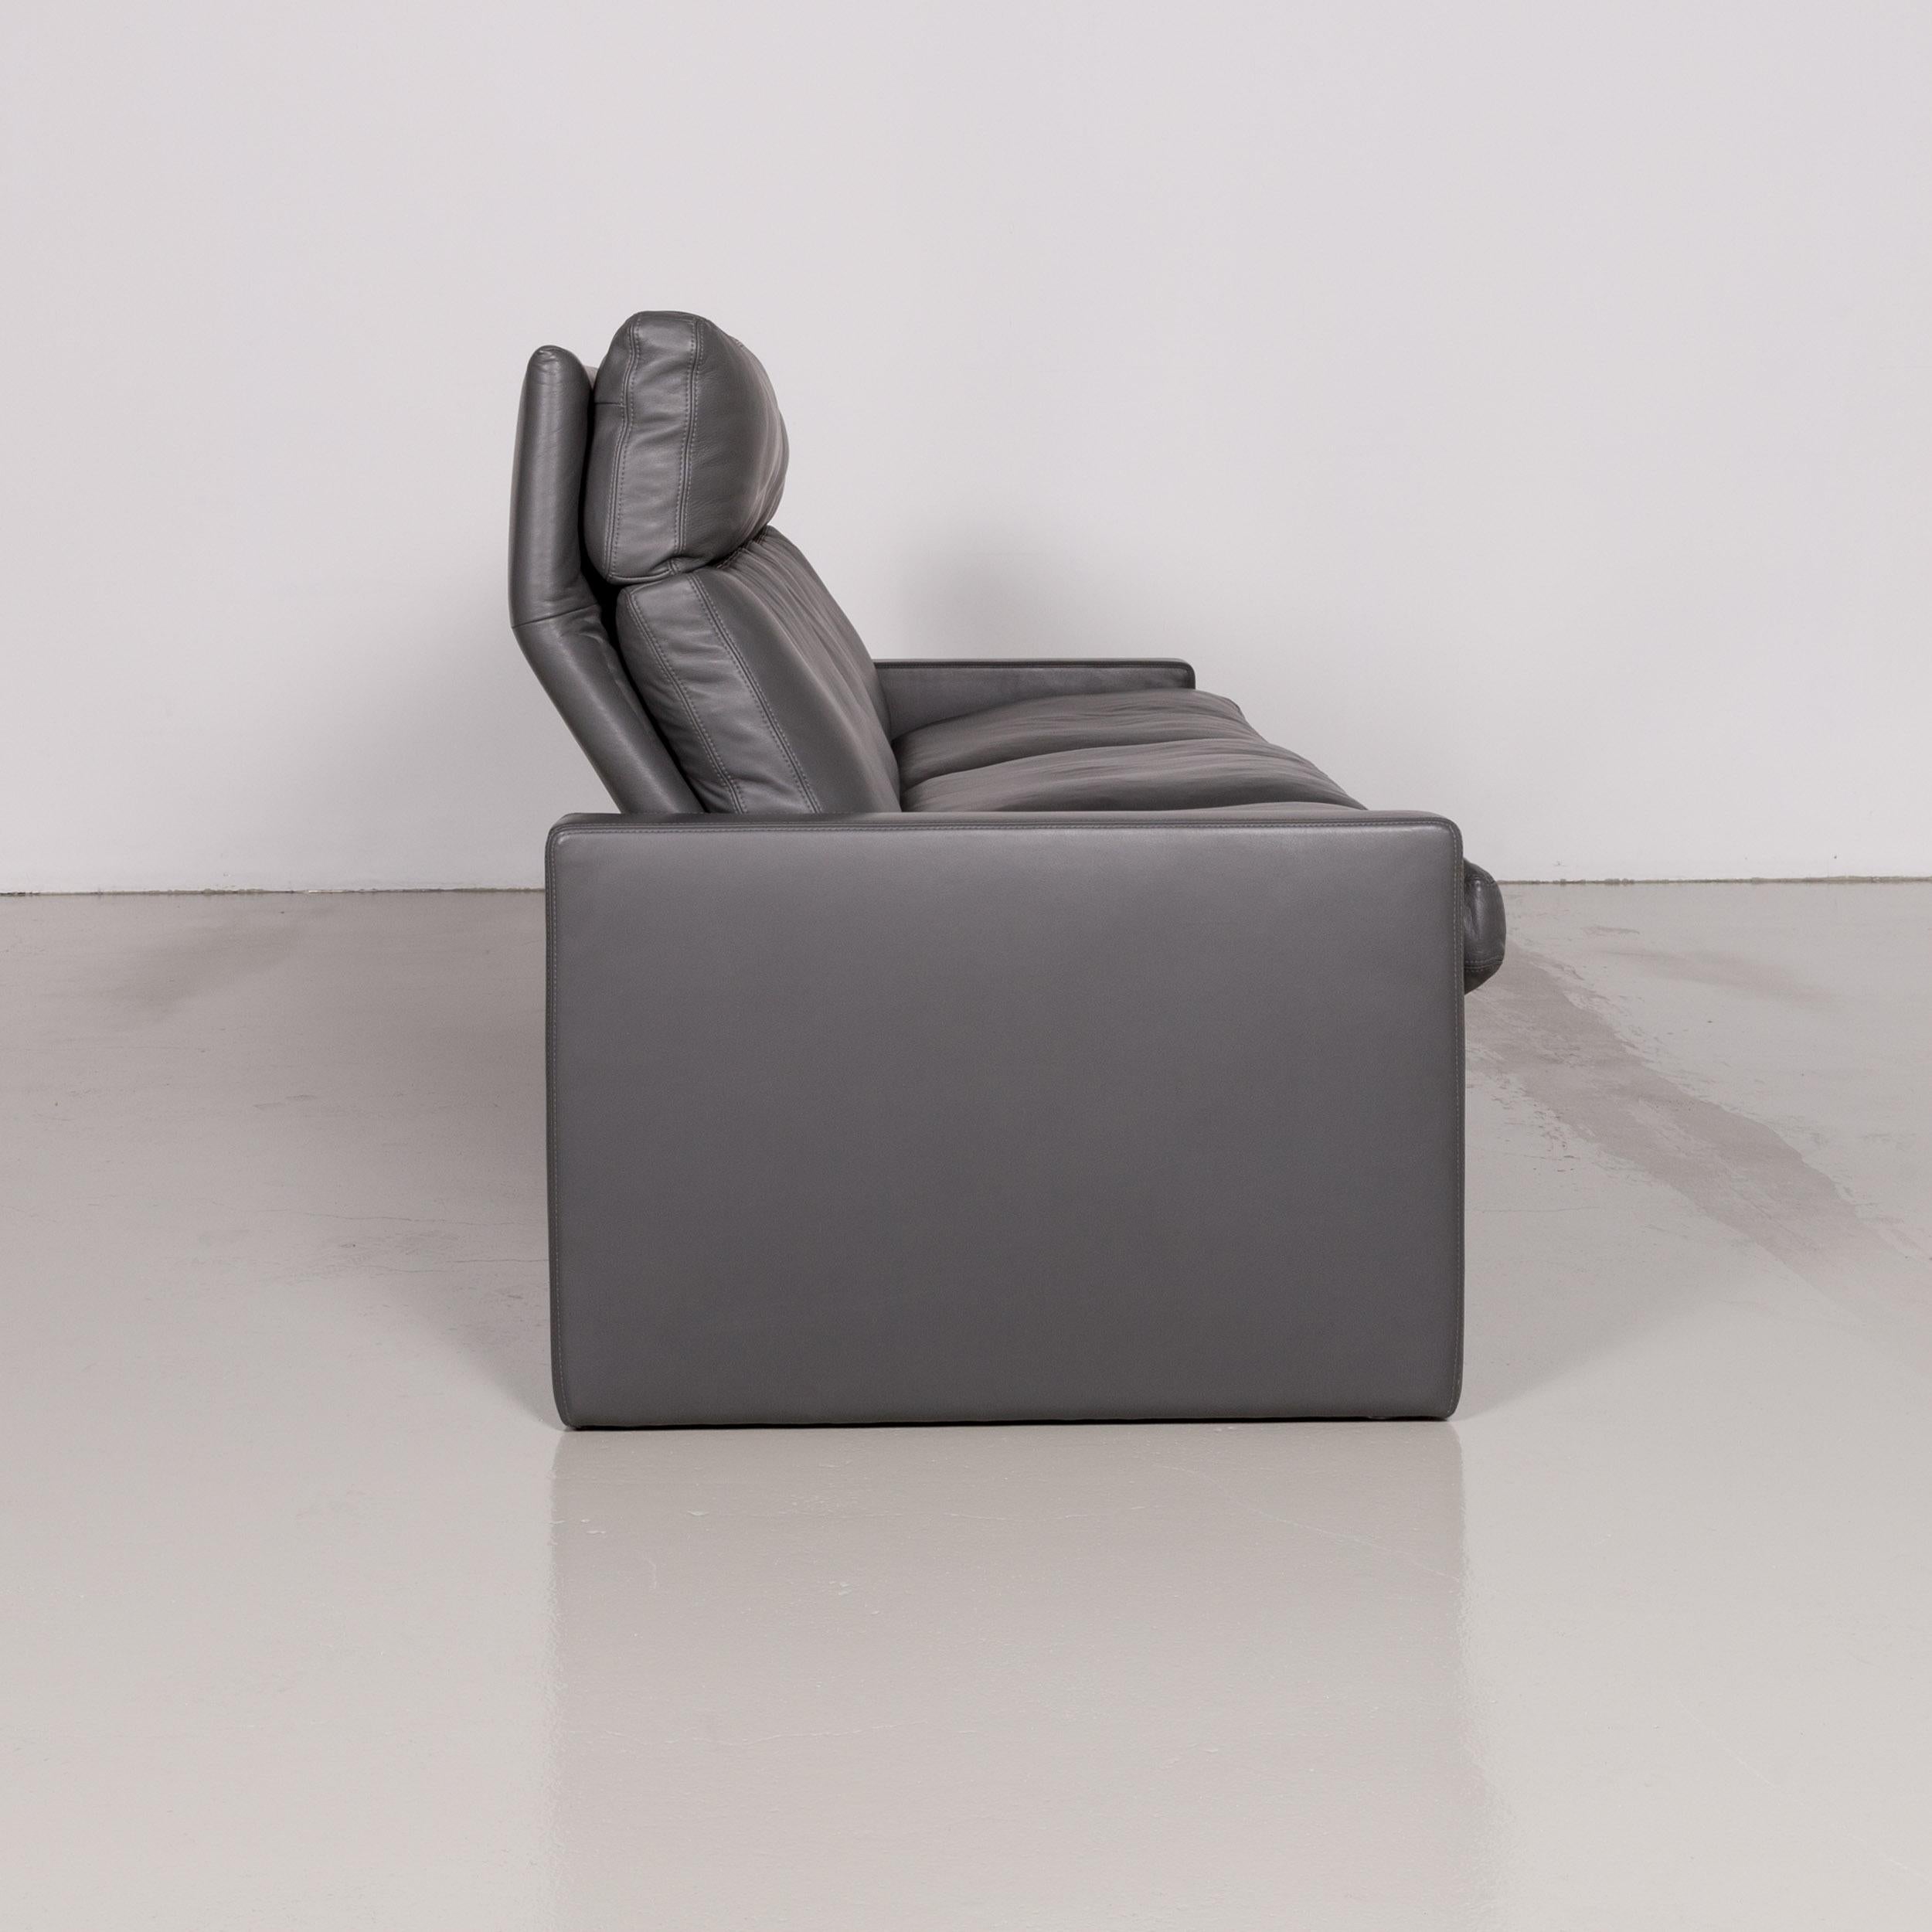 Erpo Manhattan Designer Leather Sofa in Anthracite Grey Three-Seat Couch 2